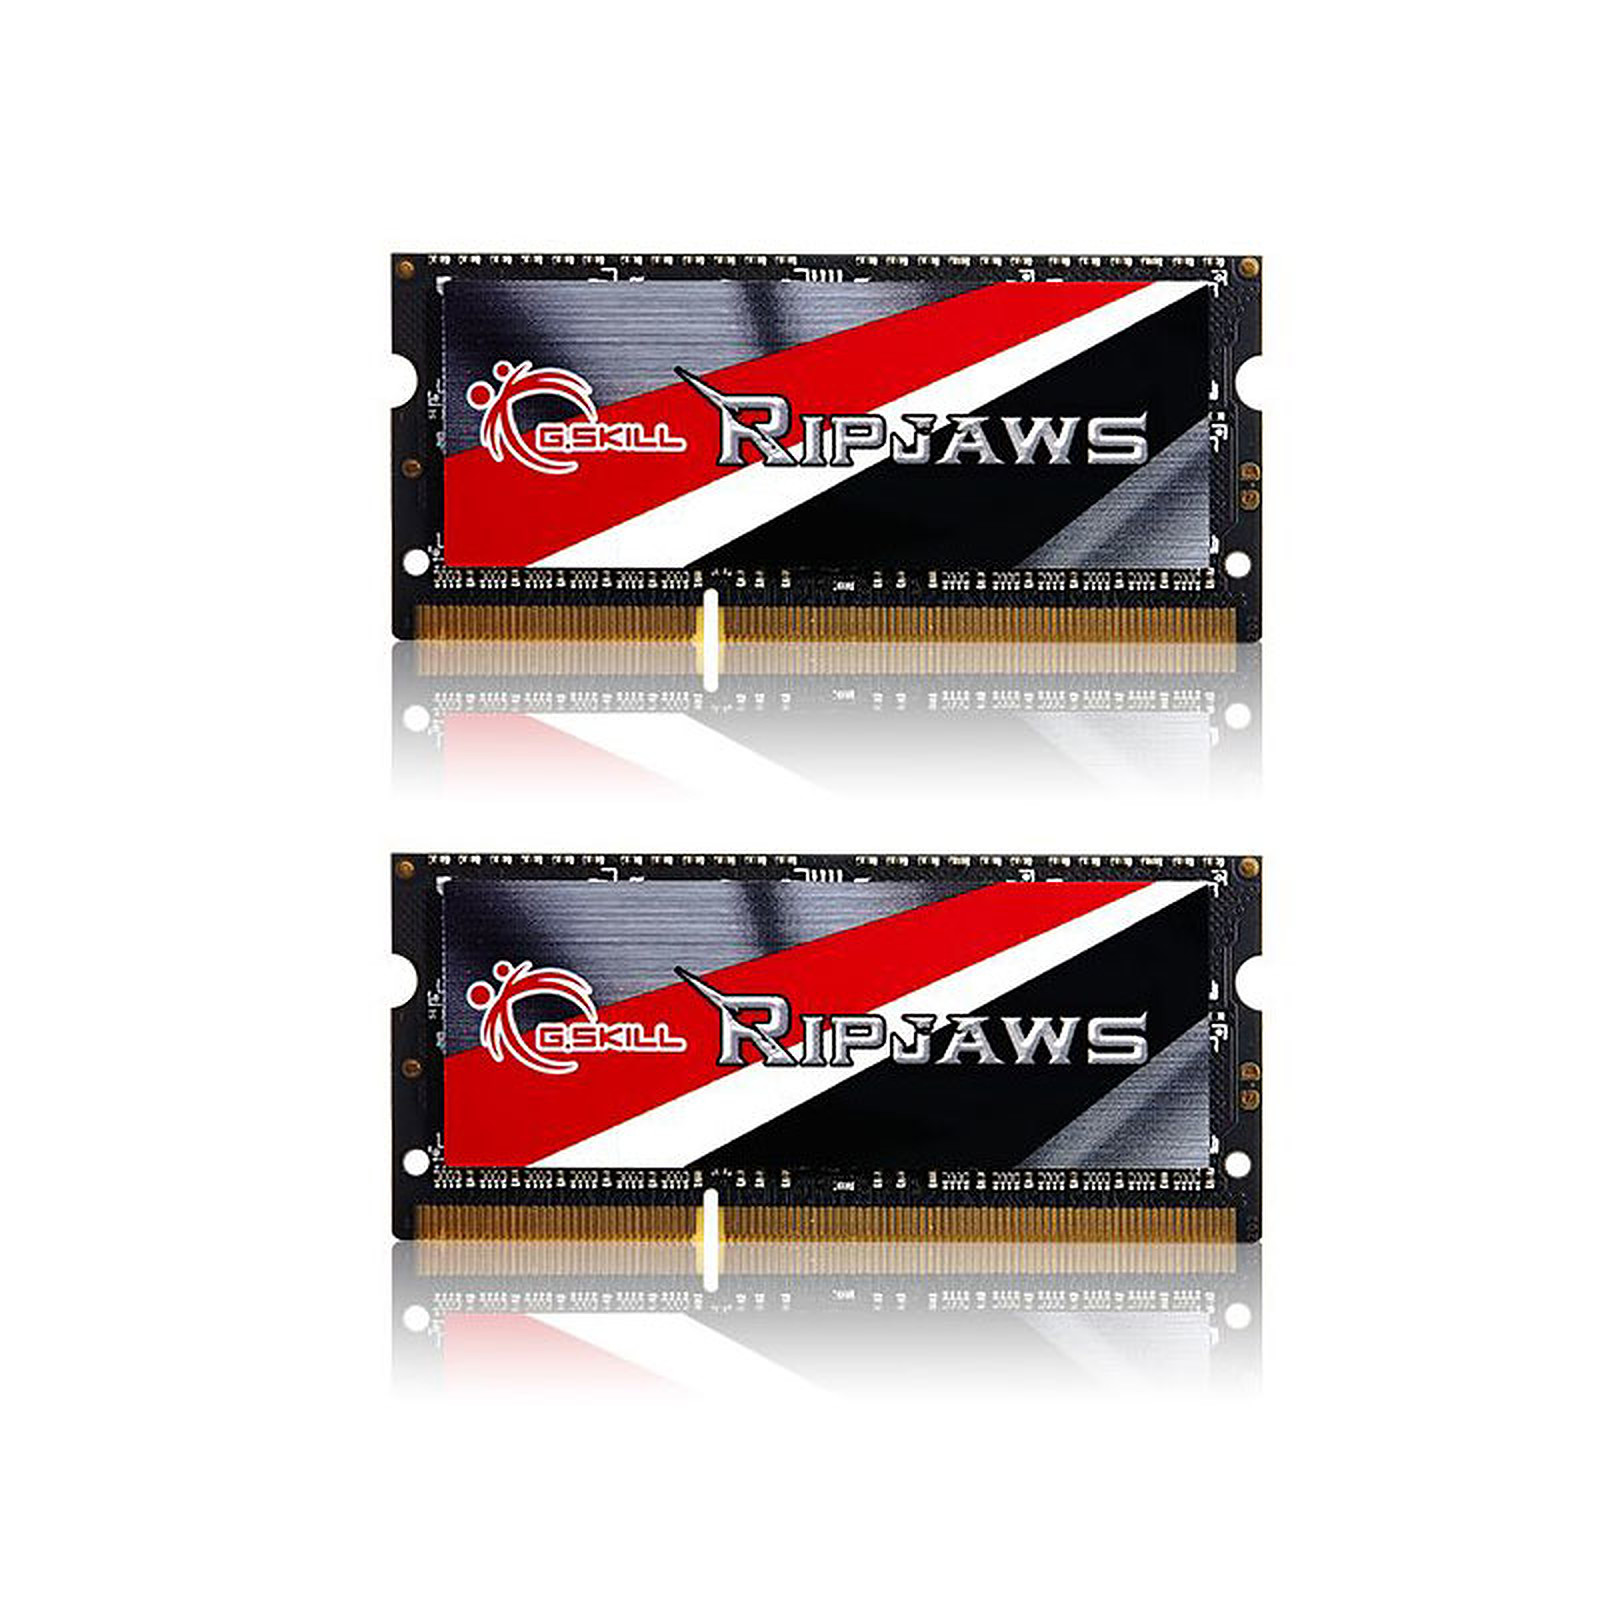 G.Skill RipJaws Series SO-DIMM 16 Go (2 x 8 Go) DDR3/DDR3L 1600 MHz CL11 - Memoire PC G.Skill